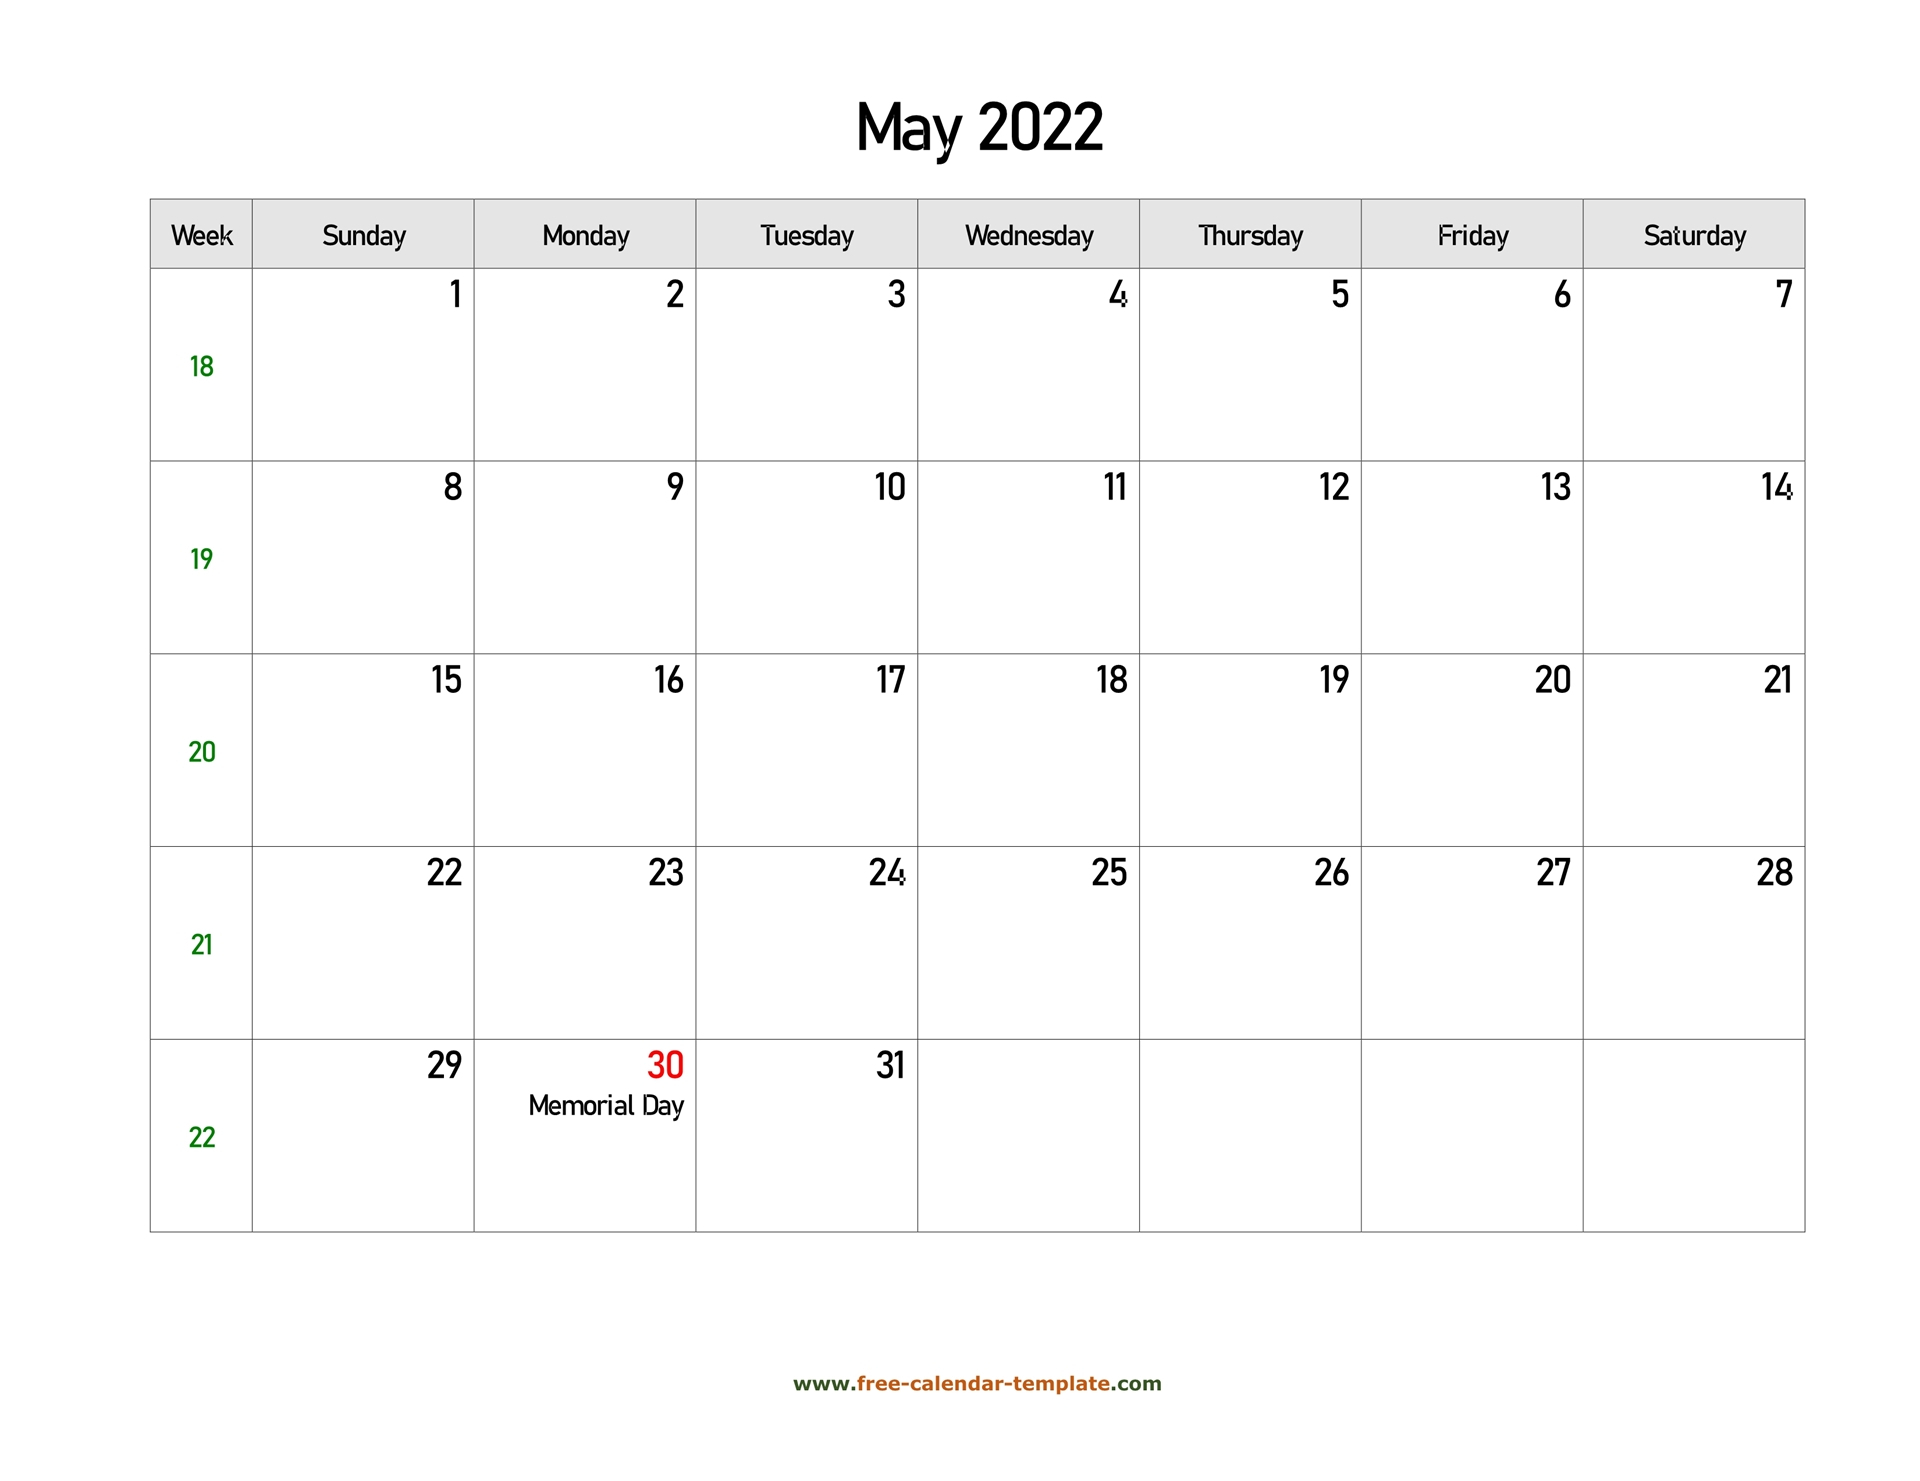 Free 2022 Calendar Blank May Template (Horizontal) | Free